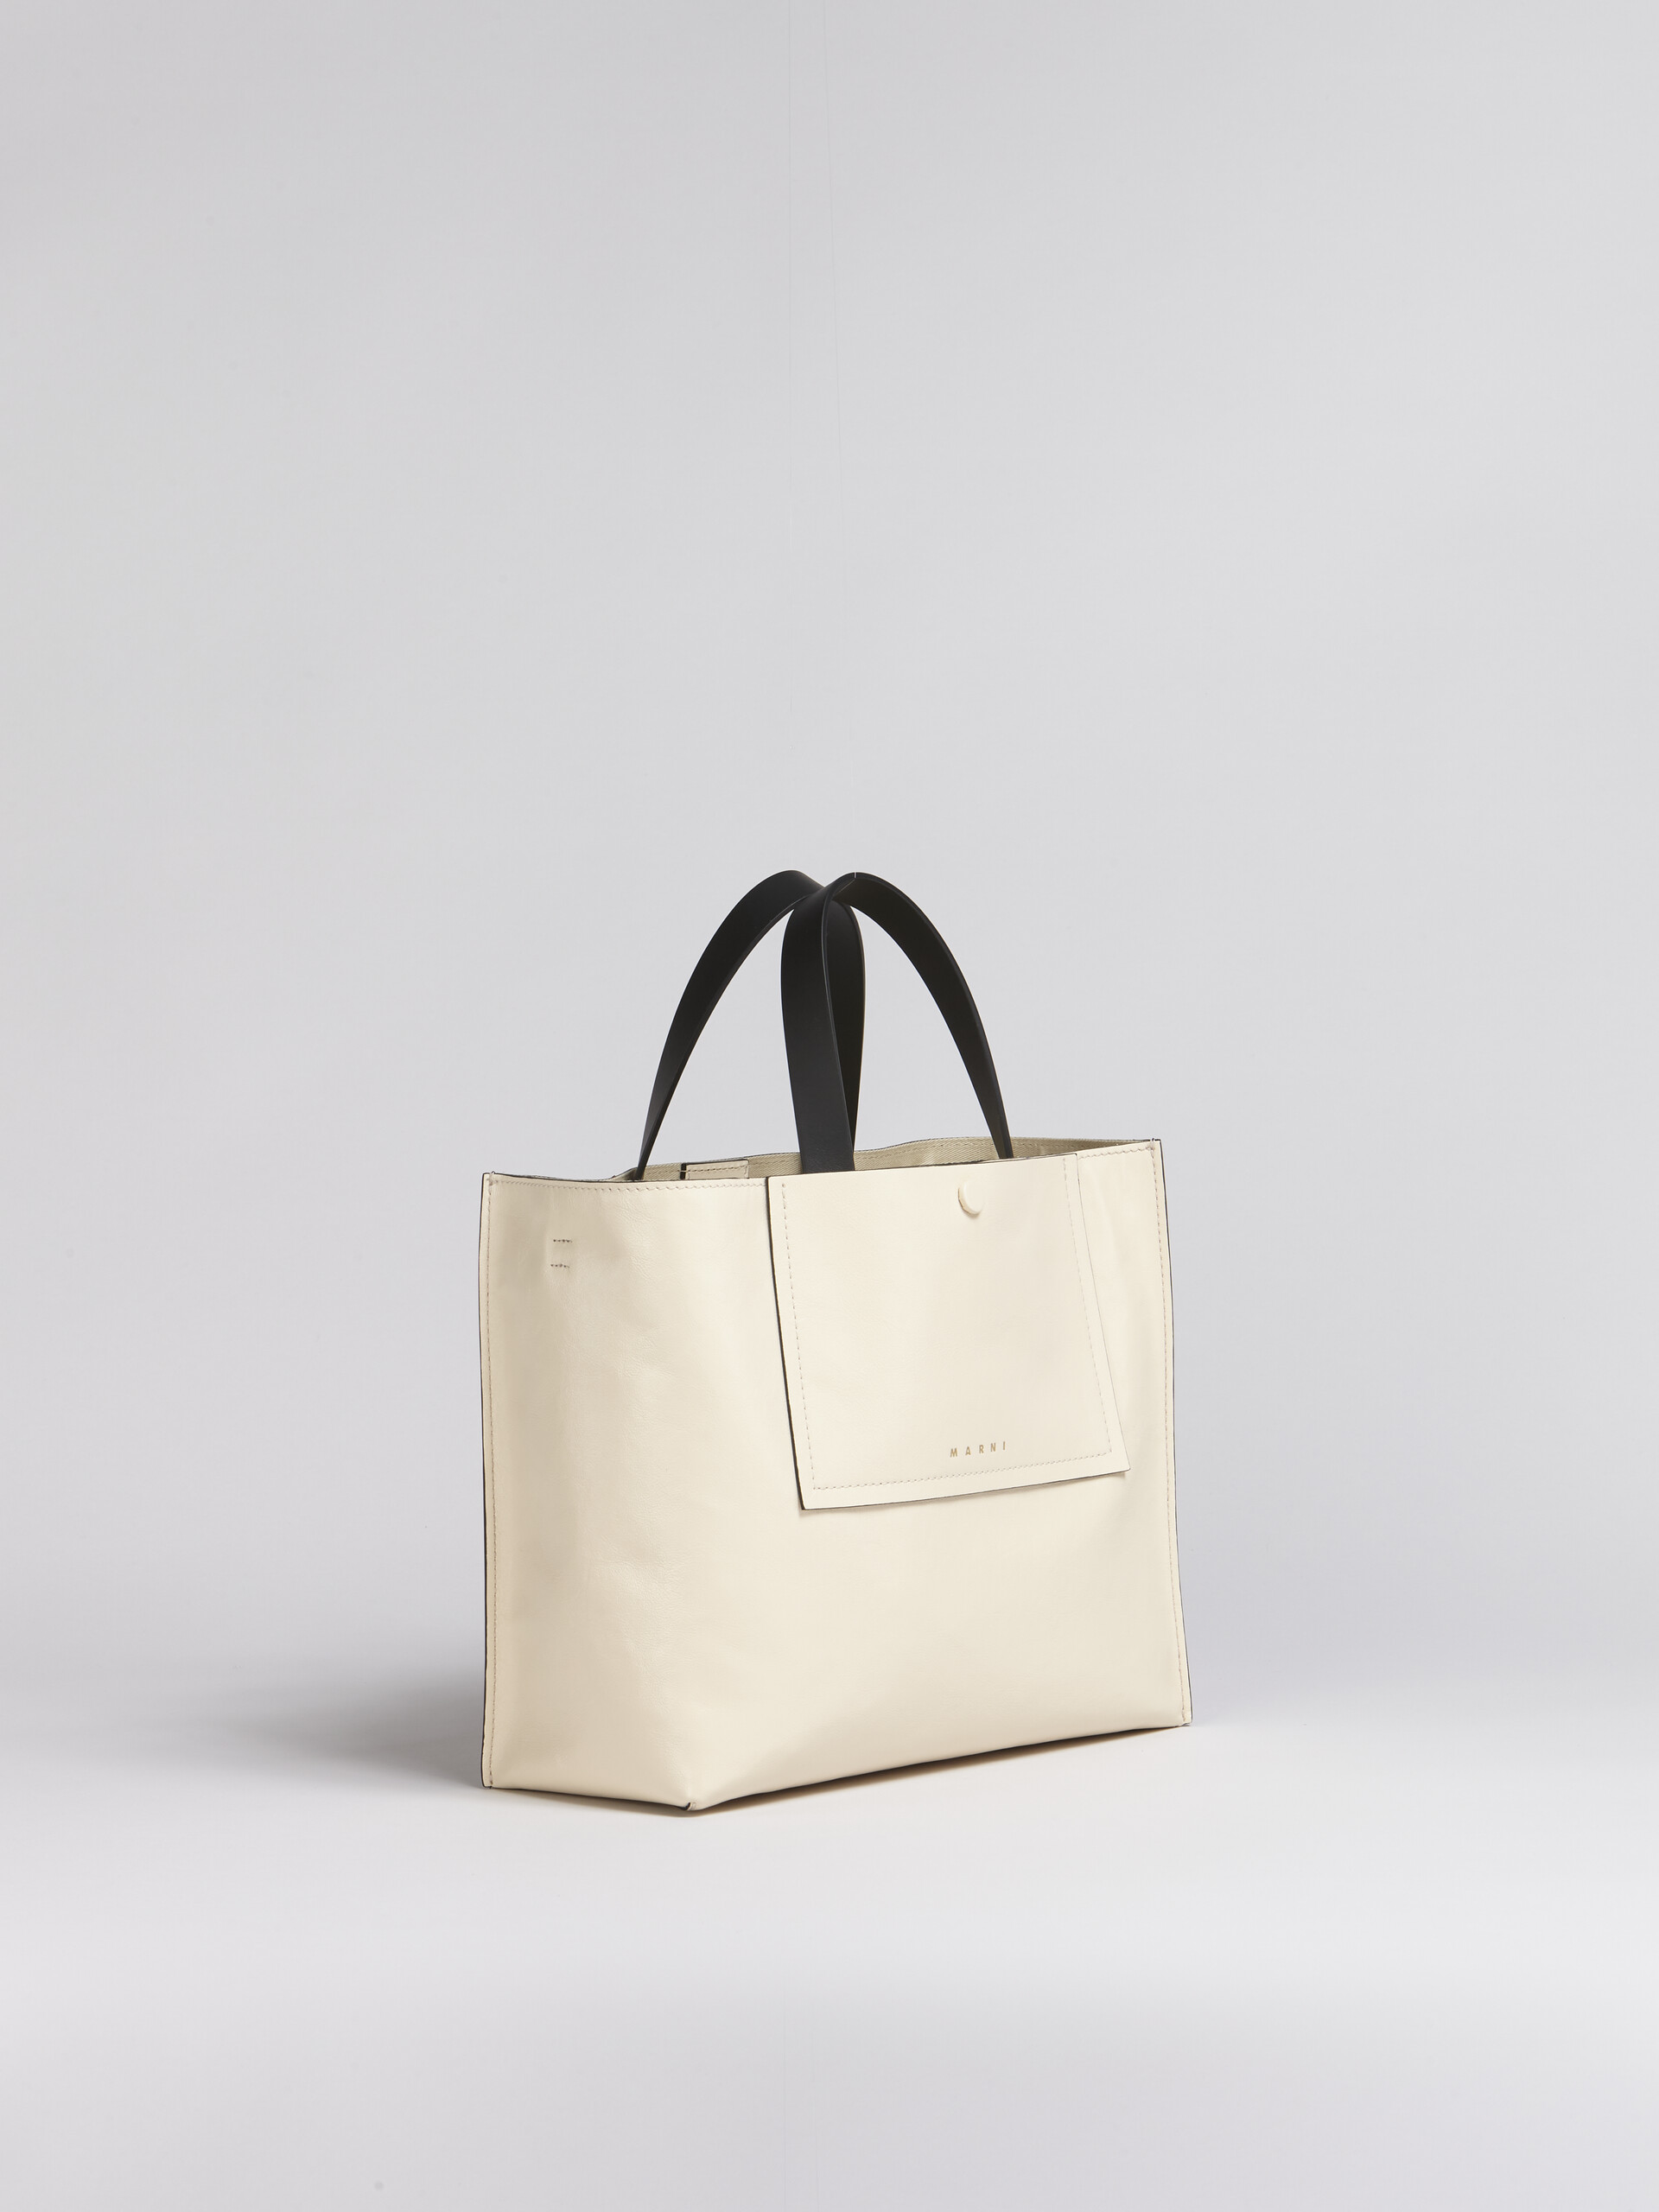 MUSEO SOFT bag piccola in pelle bianca e rosso - Borse shopping - Image 5